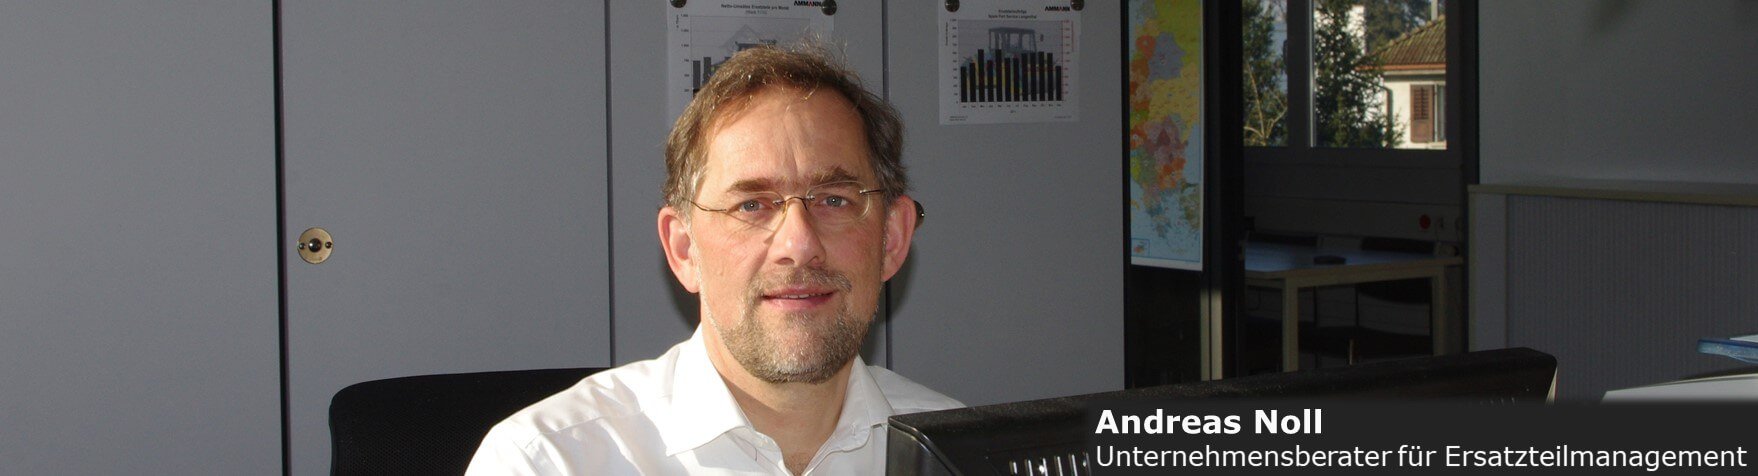 Andreas Noll: der Profi gegen zu hohe Ersatzteilebestände